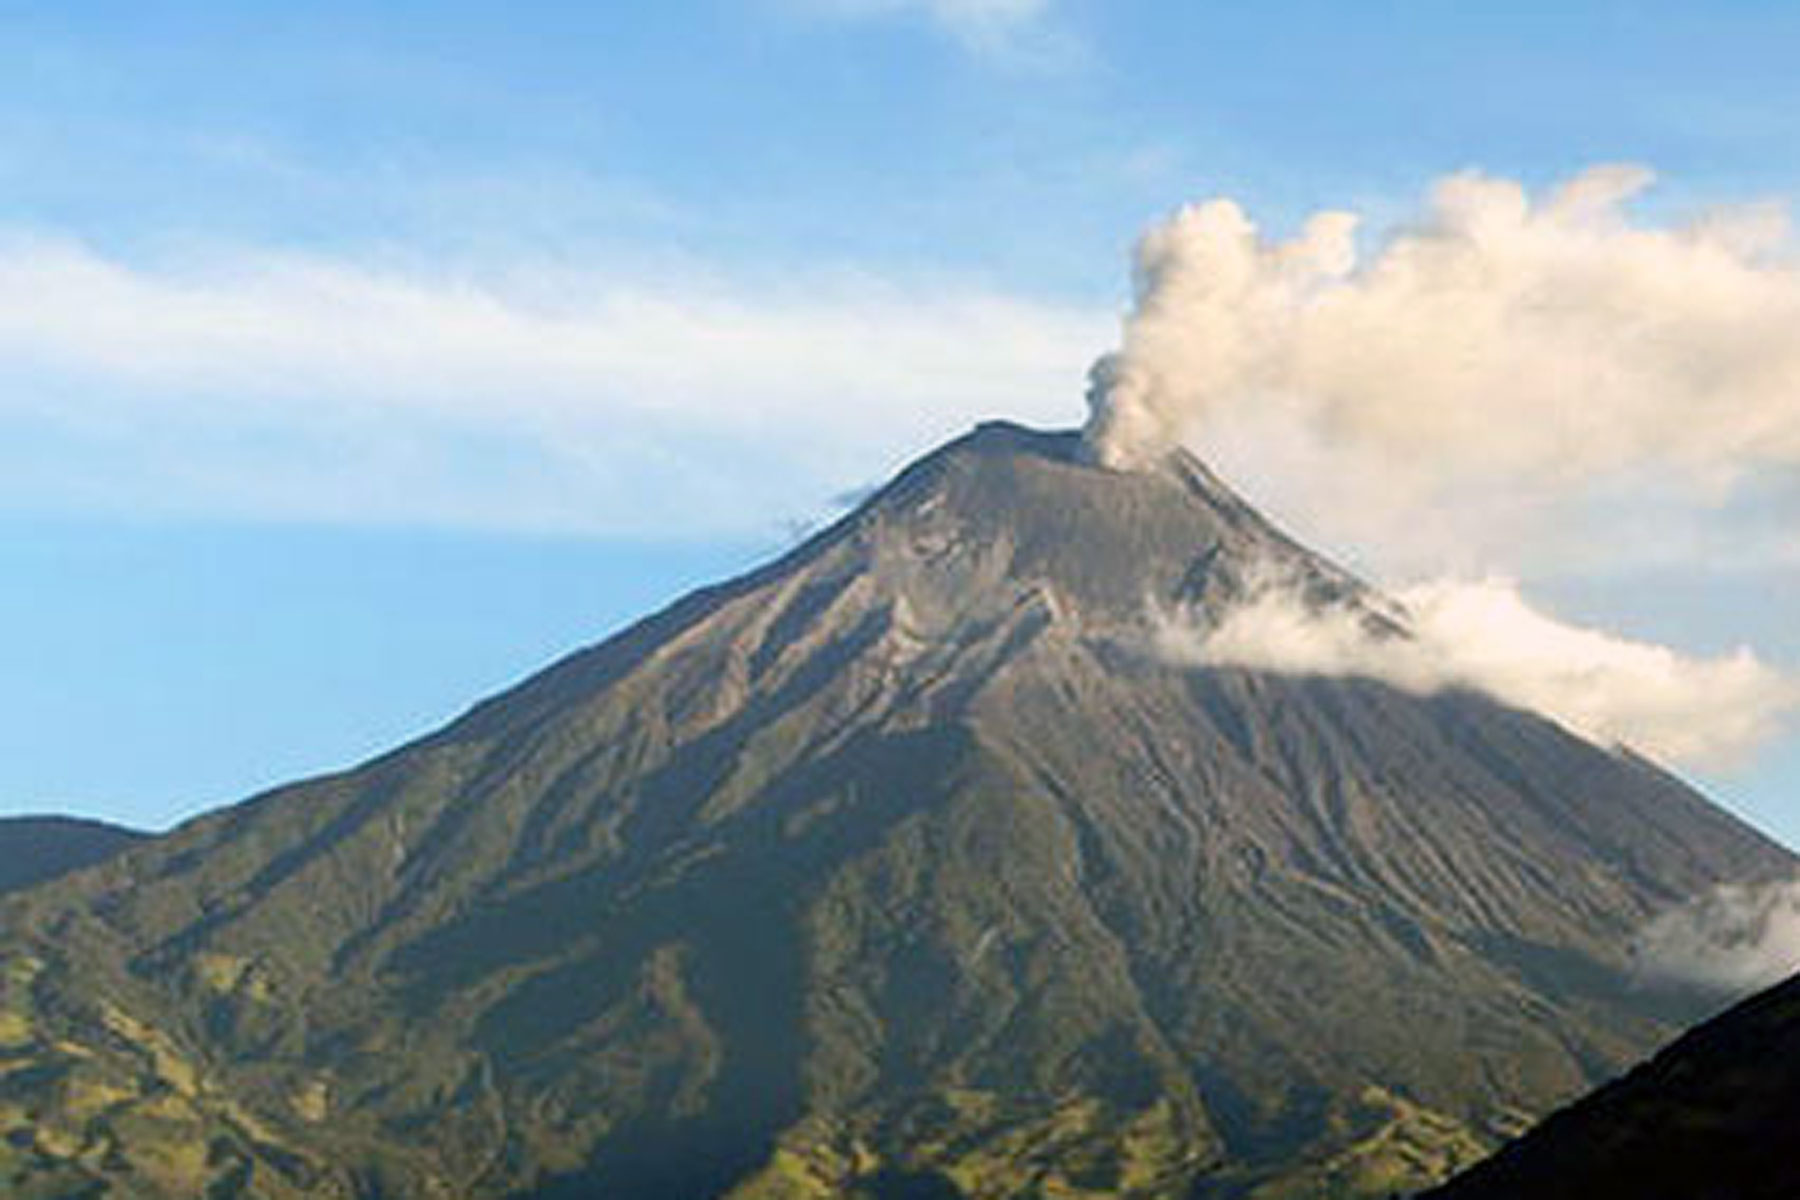 Active South America Predicts Ecuador is the Next Hot Destination for